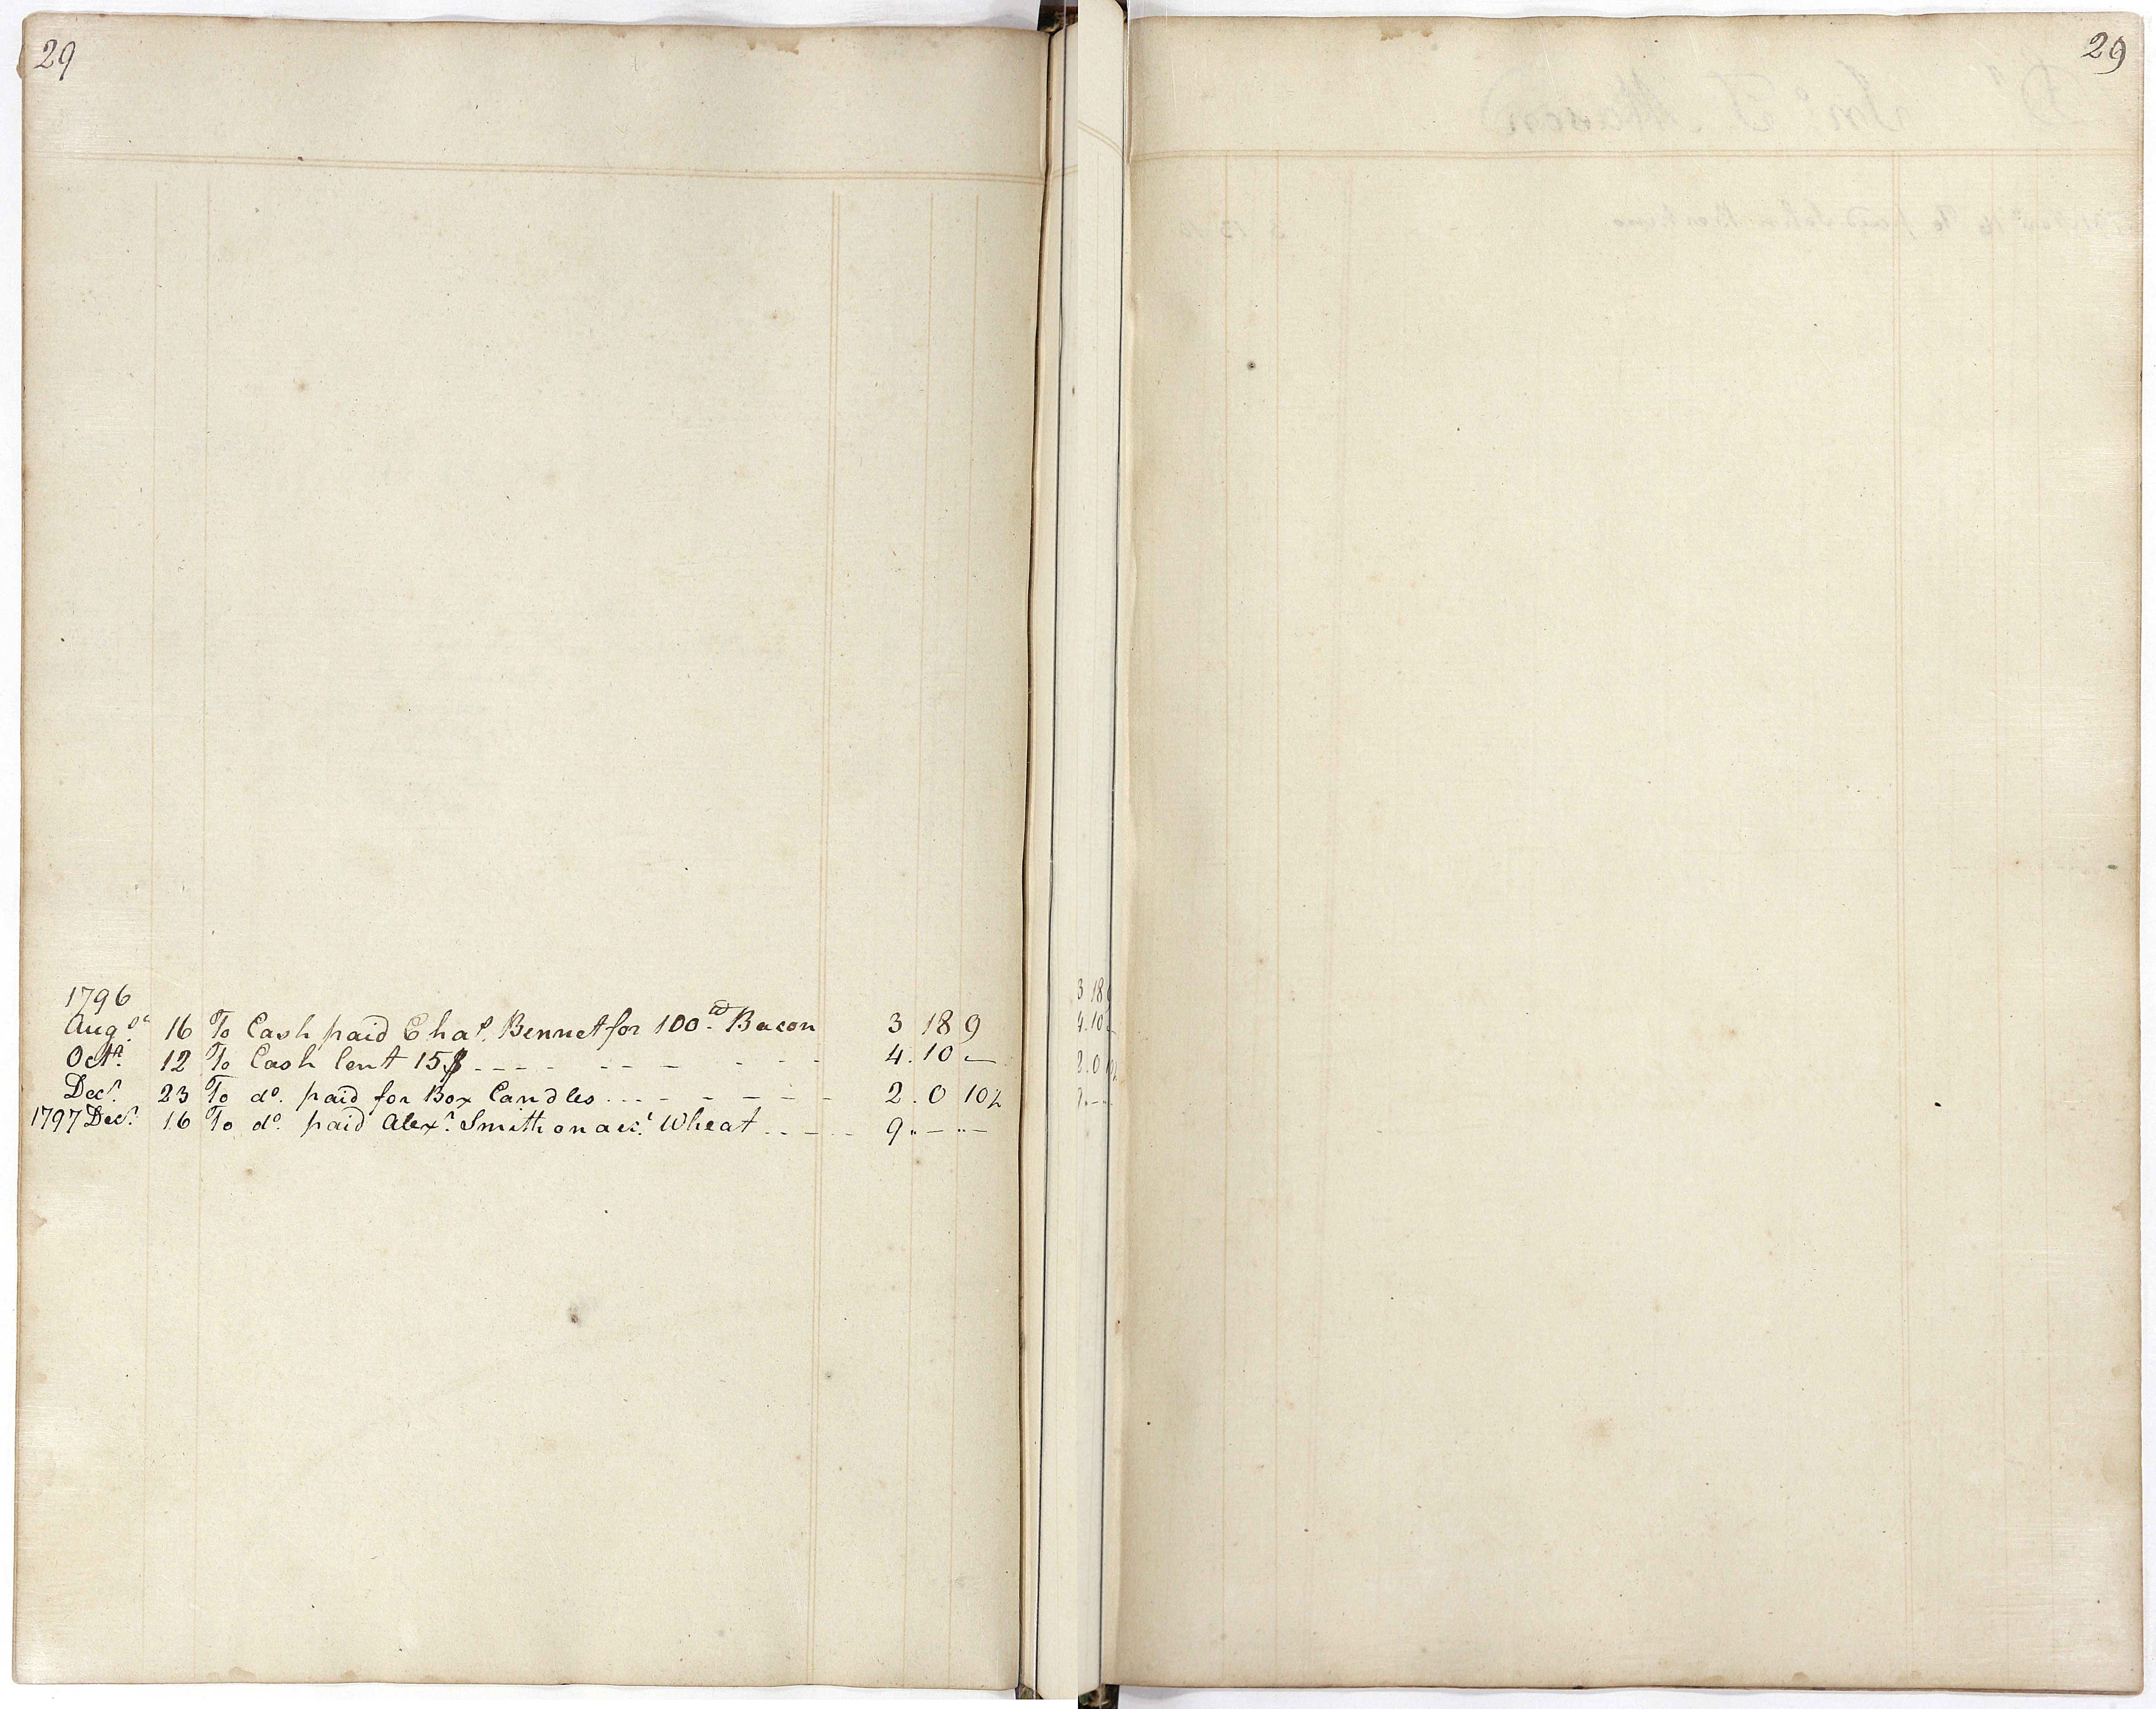 Image of Folio 29 (transcription below)